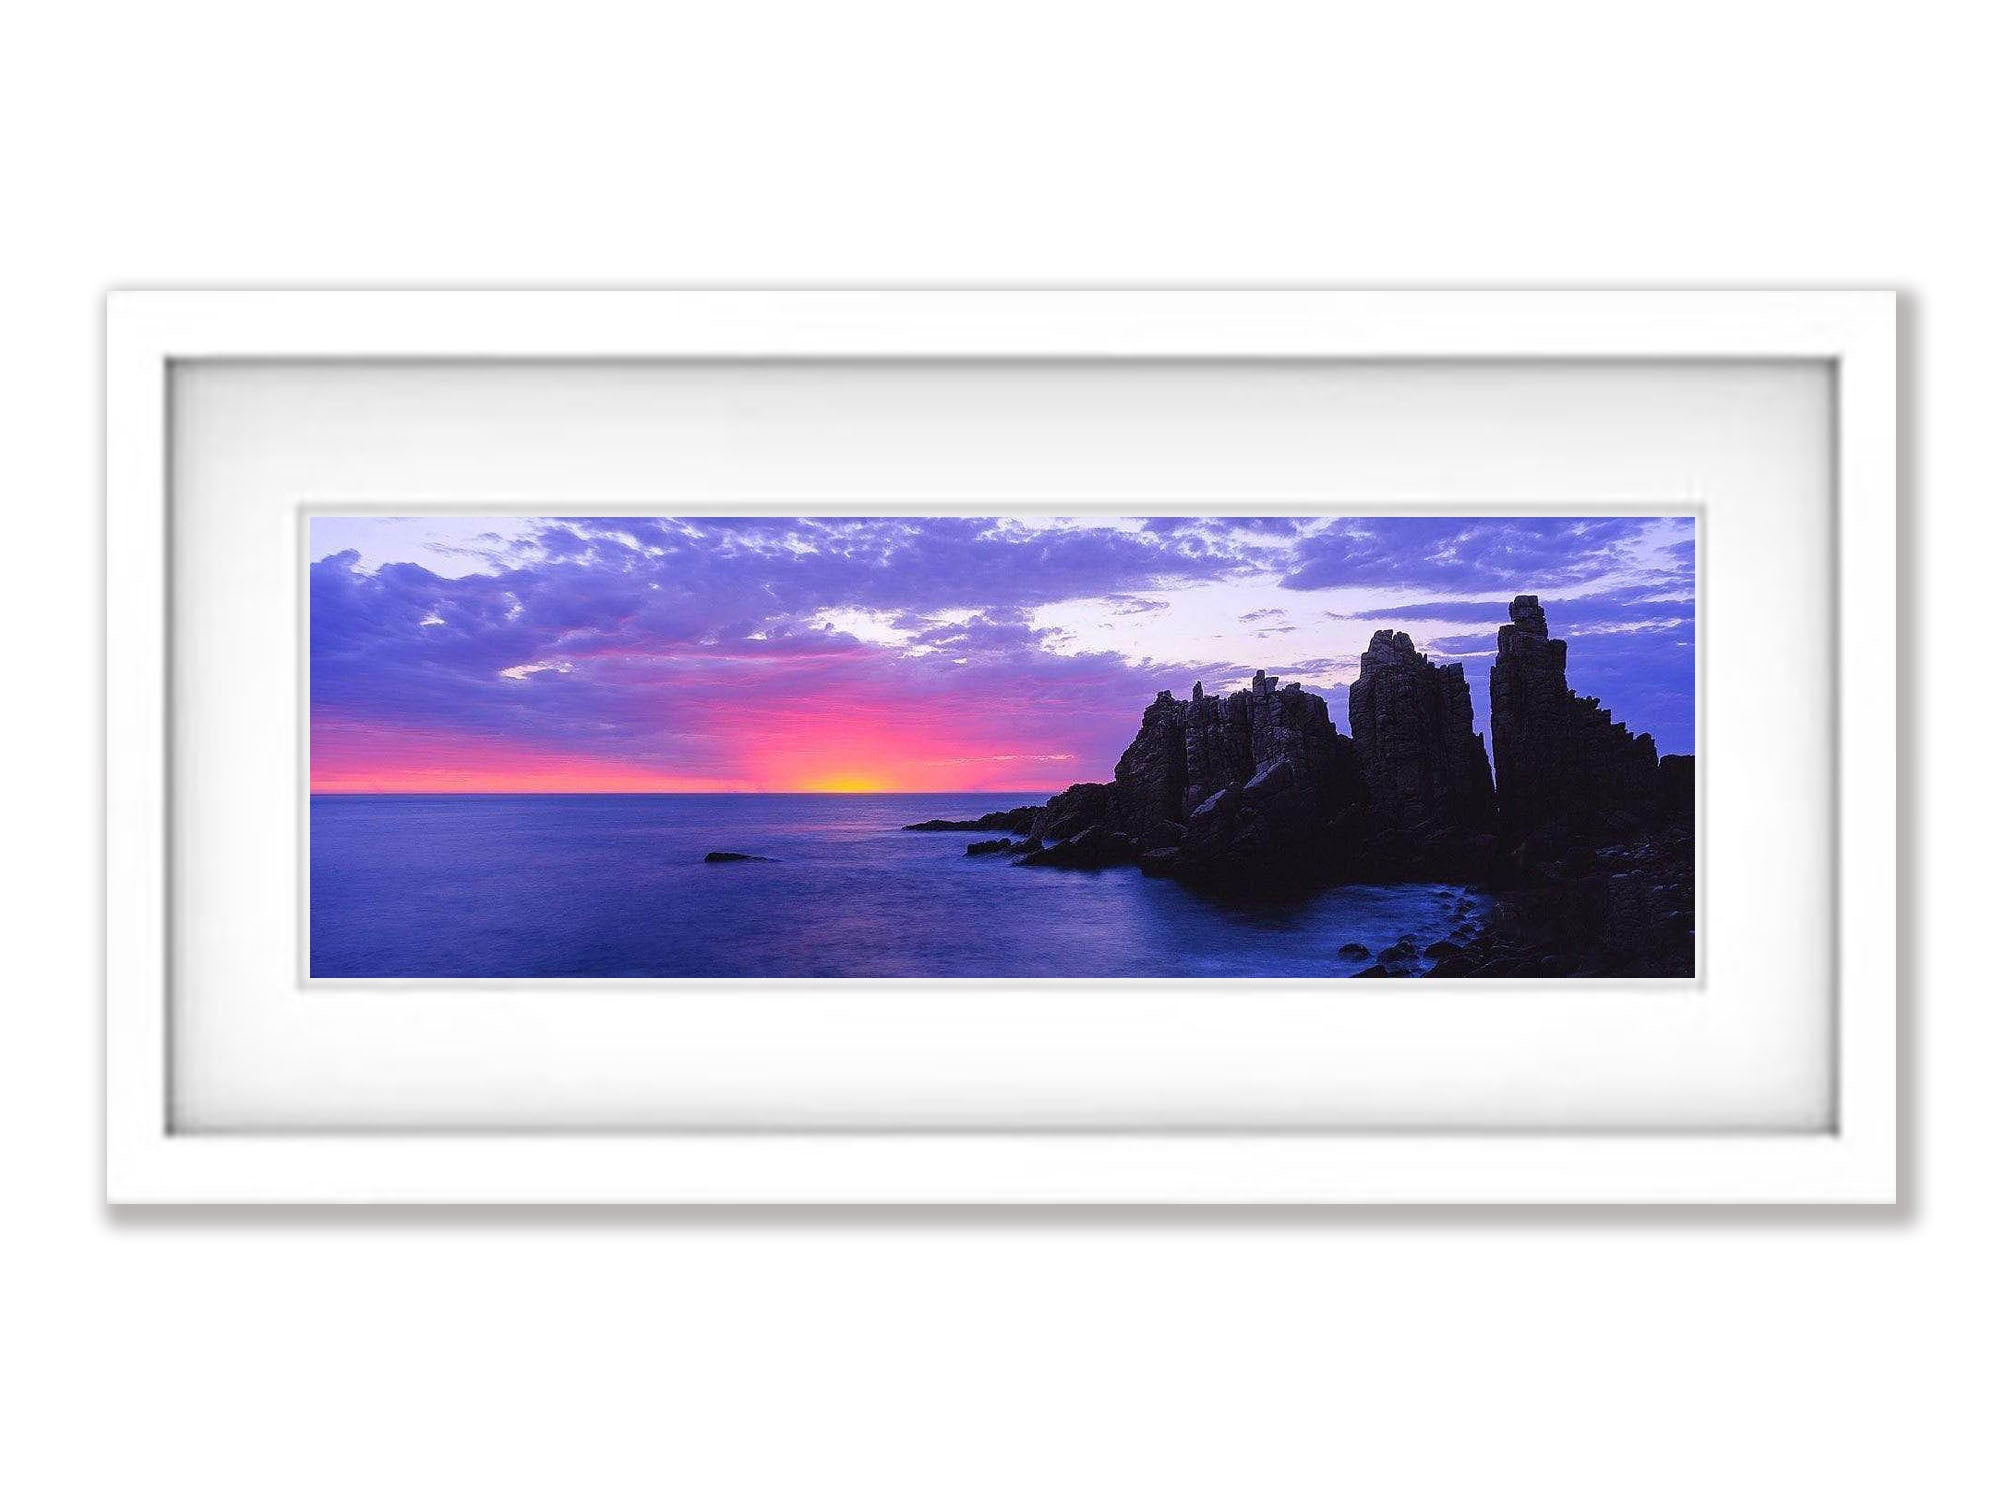 The Pinnacles Sunset - Cape Woolamai VIC